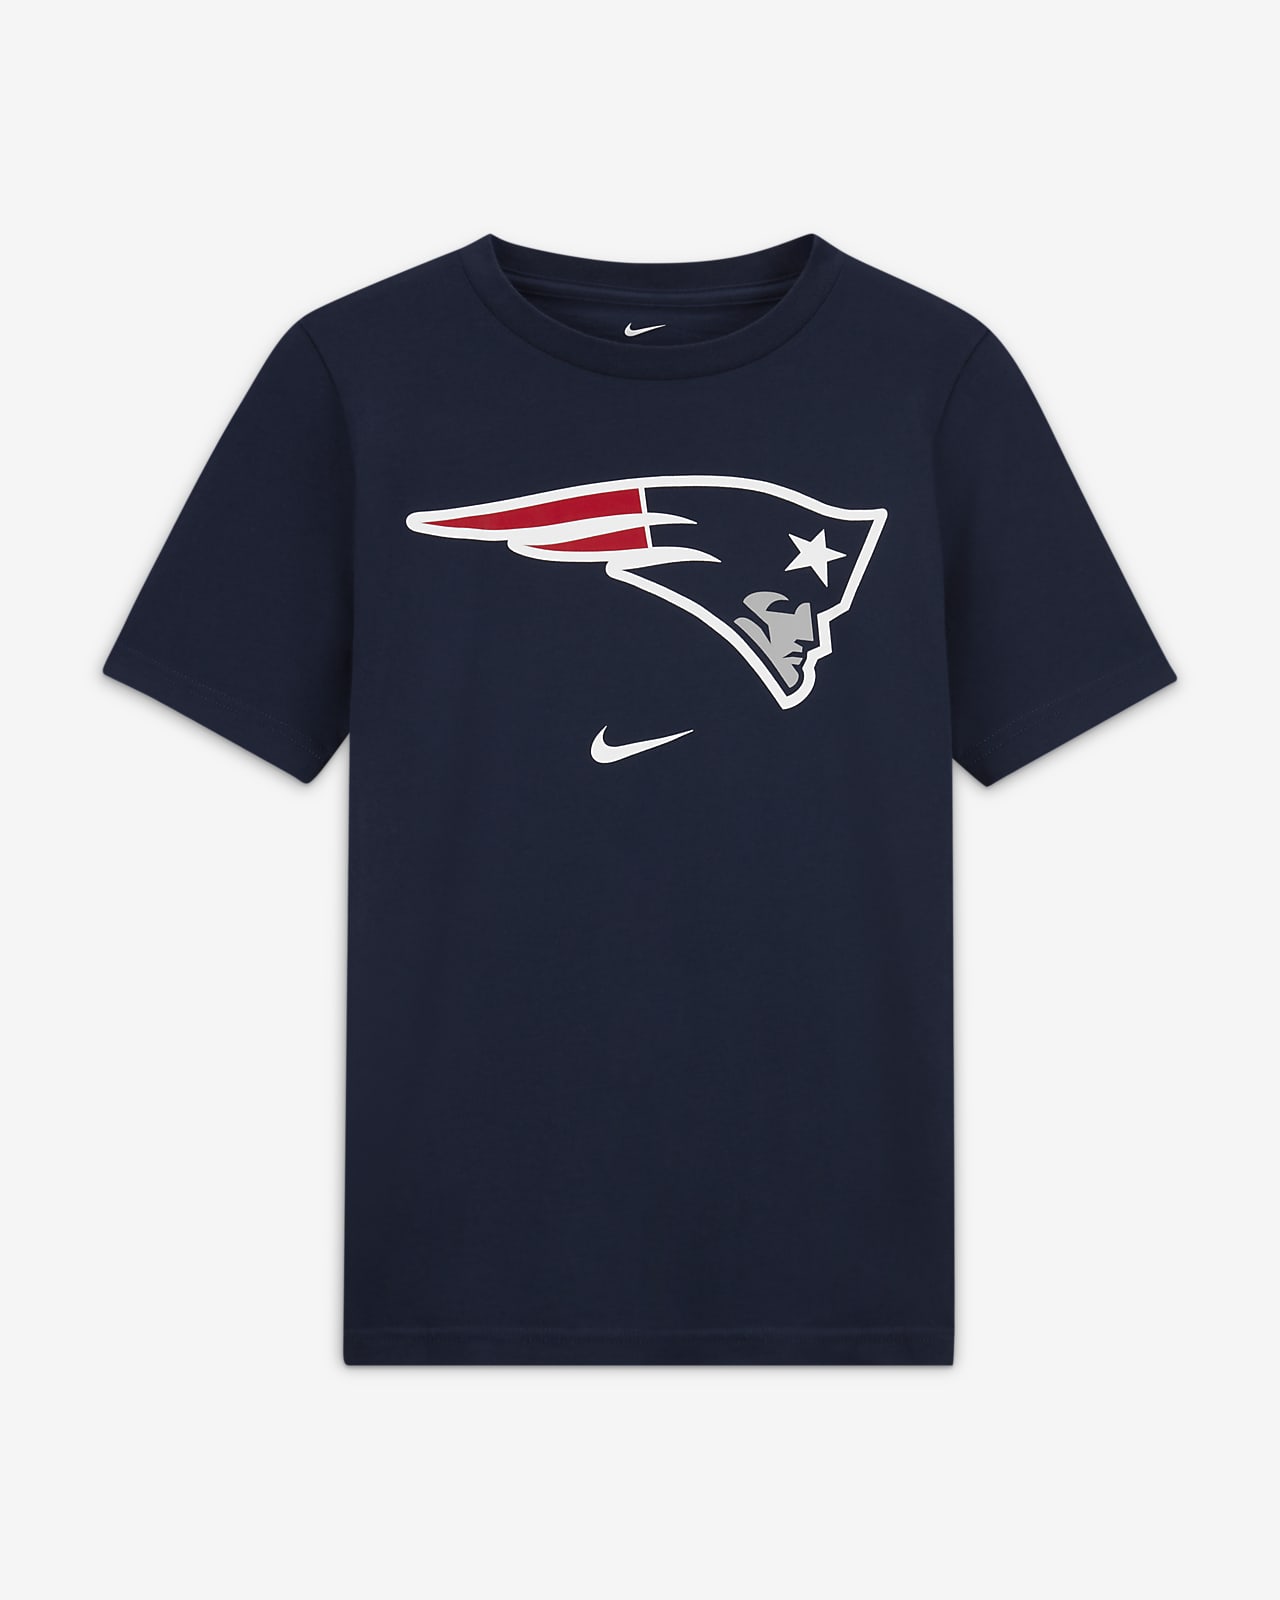 Nike (NFL New England Patriots) Older Kids' T-Shirt